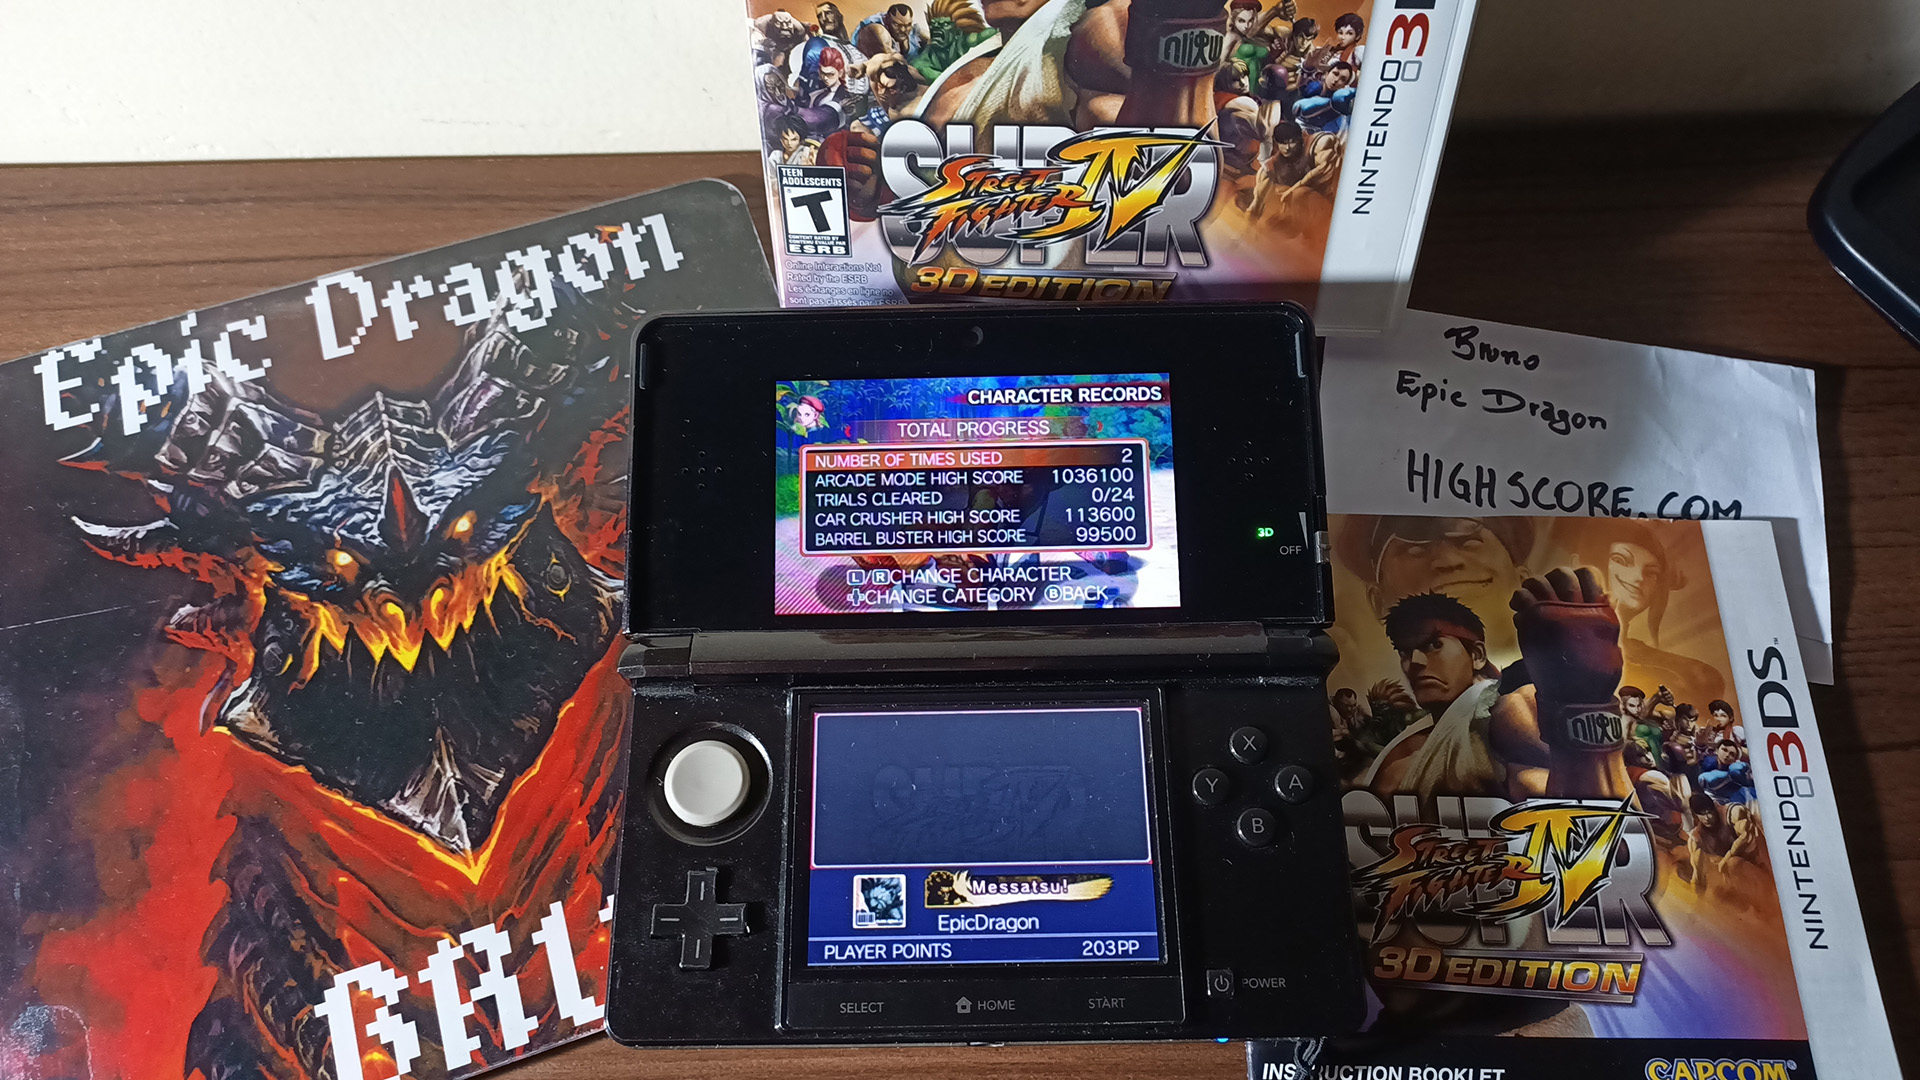 EpicDragon: Super Street Fighter IV 3D Edition: Challenge: Barrel Buster [Cammy] (Nintendo 3DS) 99,500 points on 2022-08-01 20:54:08